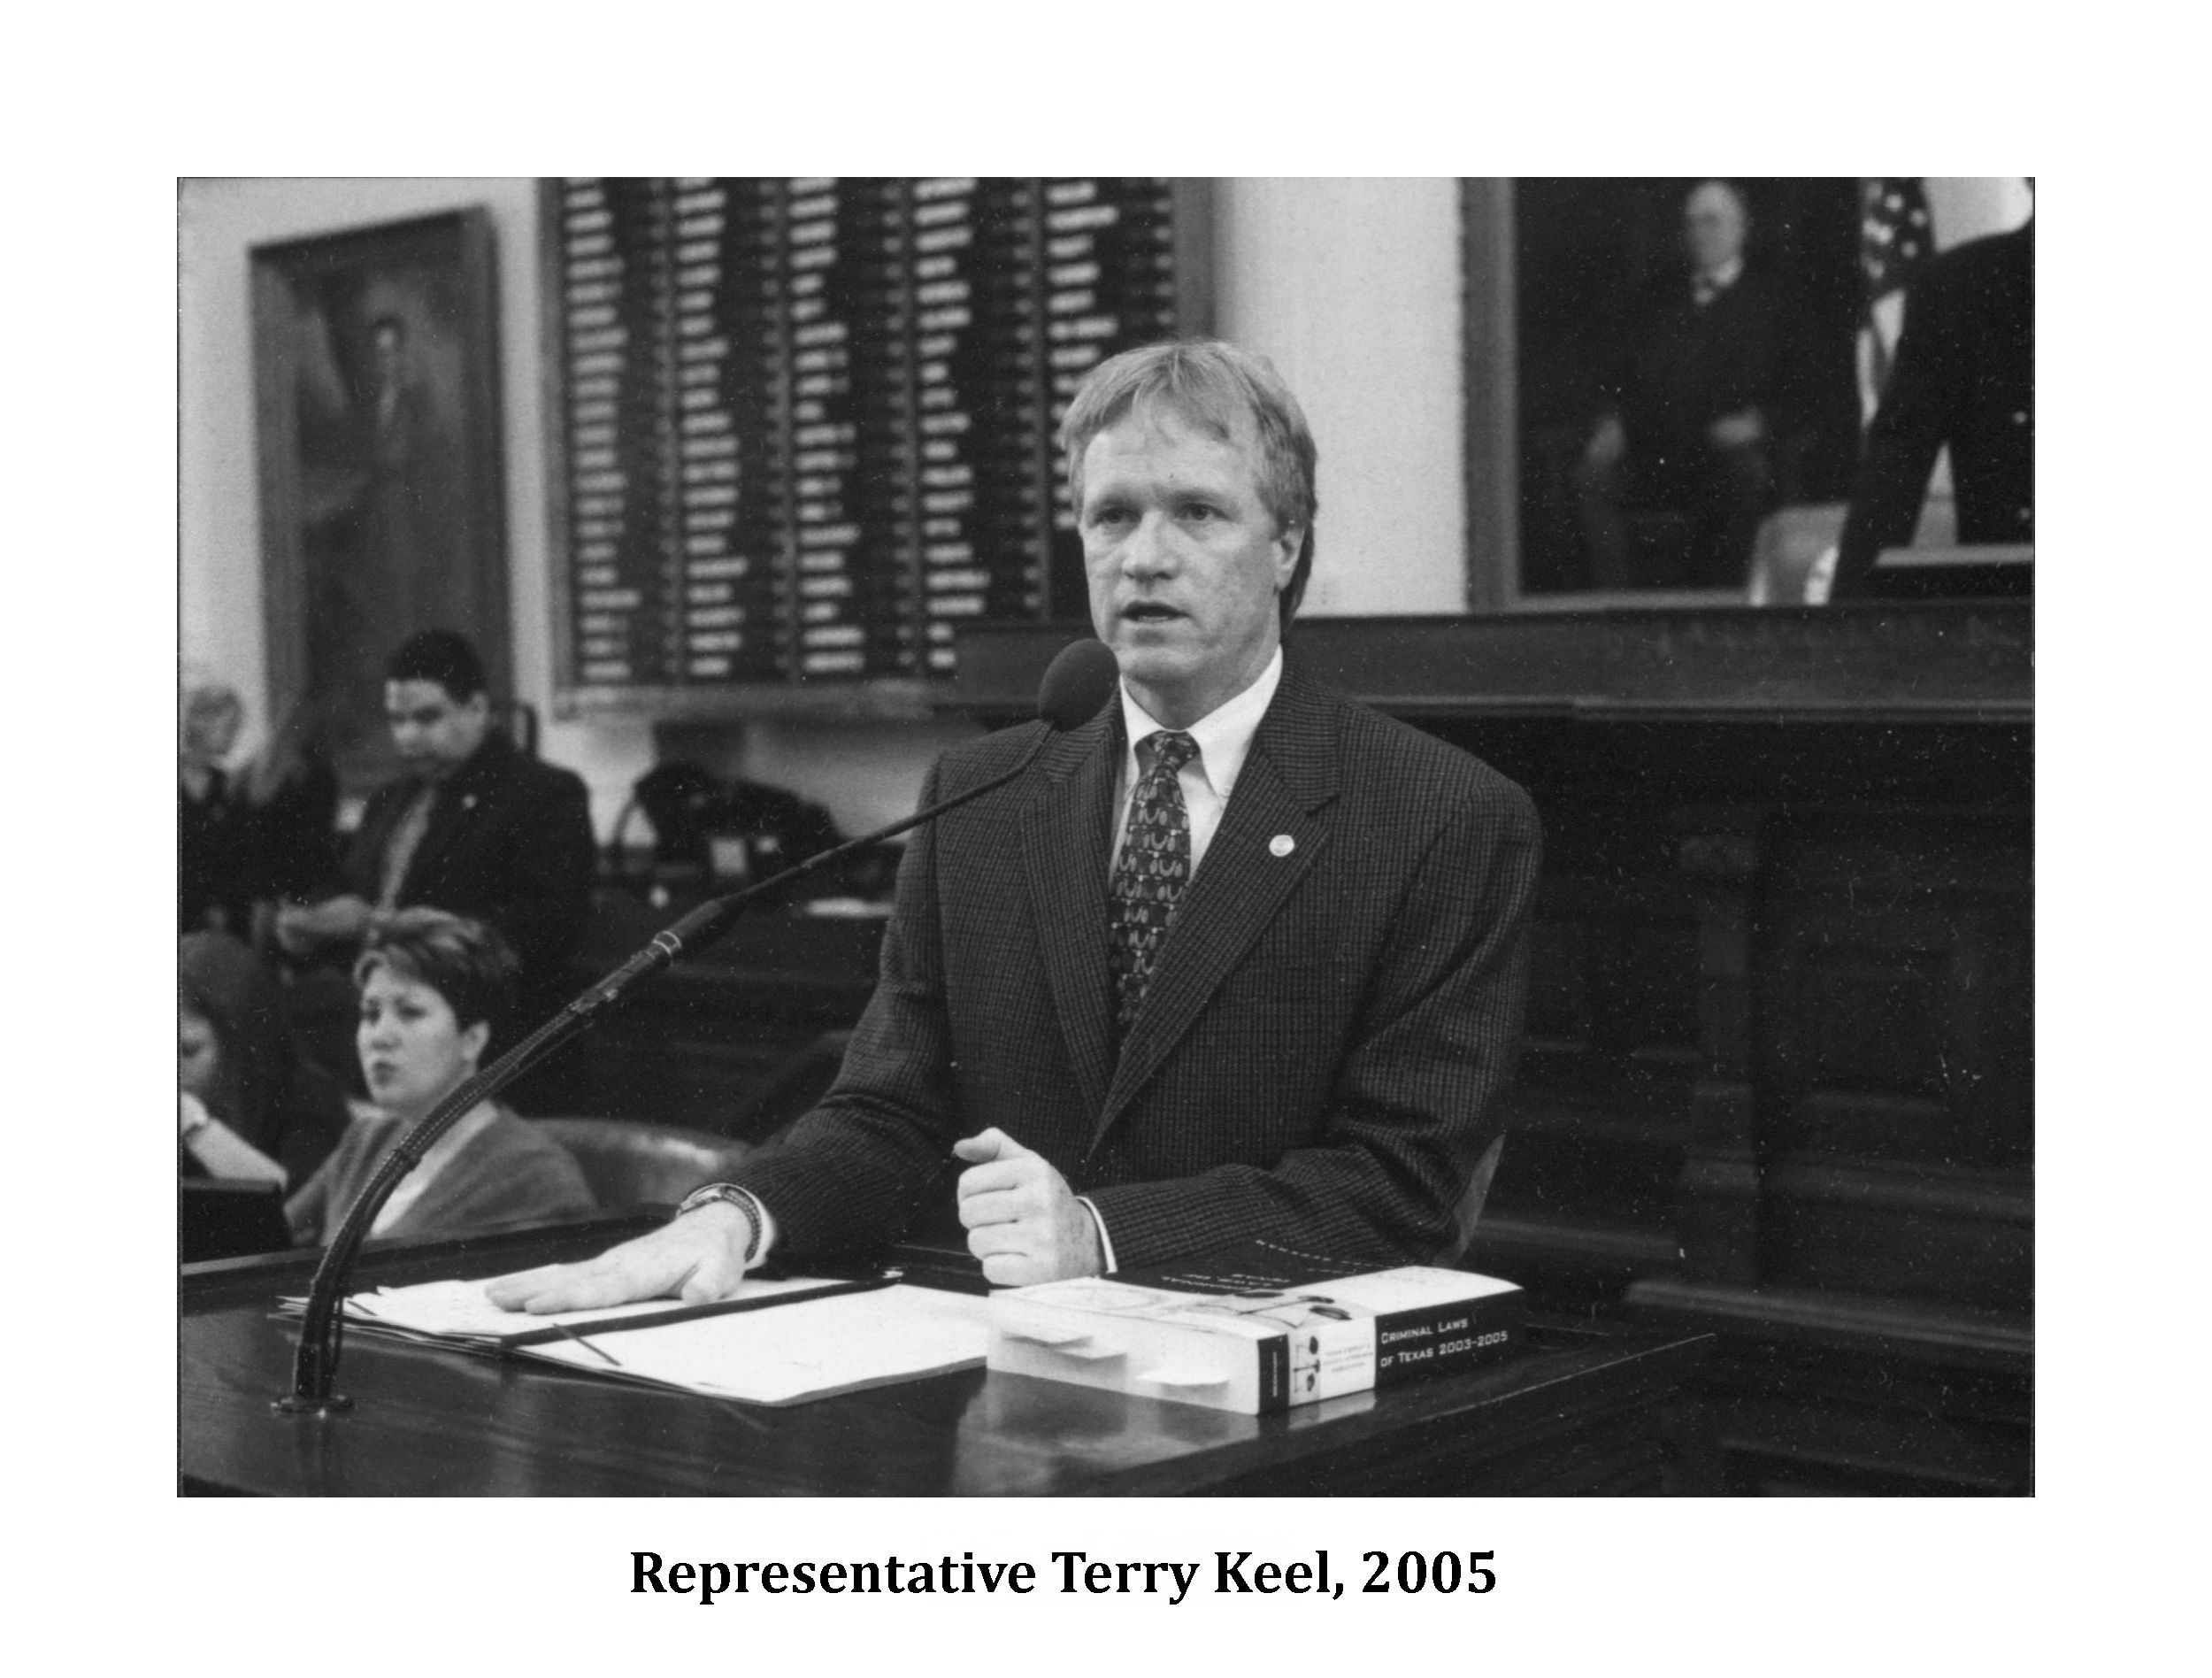 Representative Terry Keel, Texas House of Representatives, 2005. Photo courtesy of Terry Keel